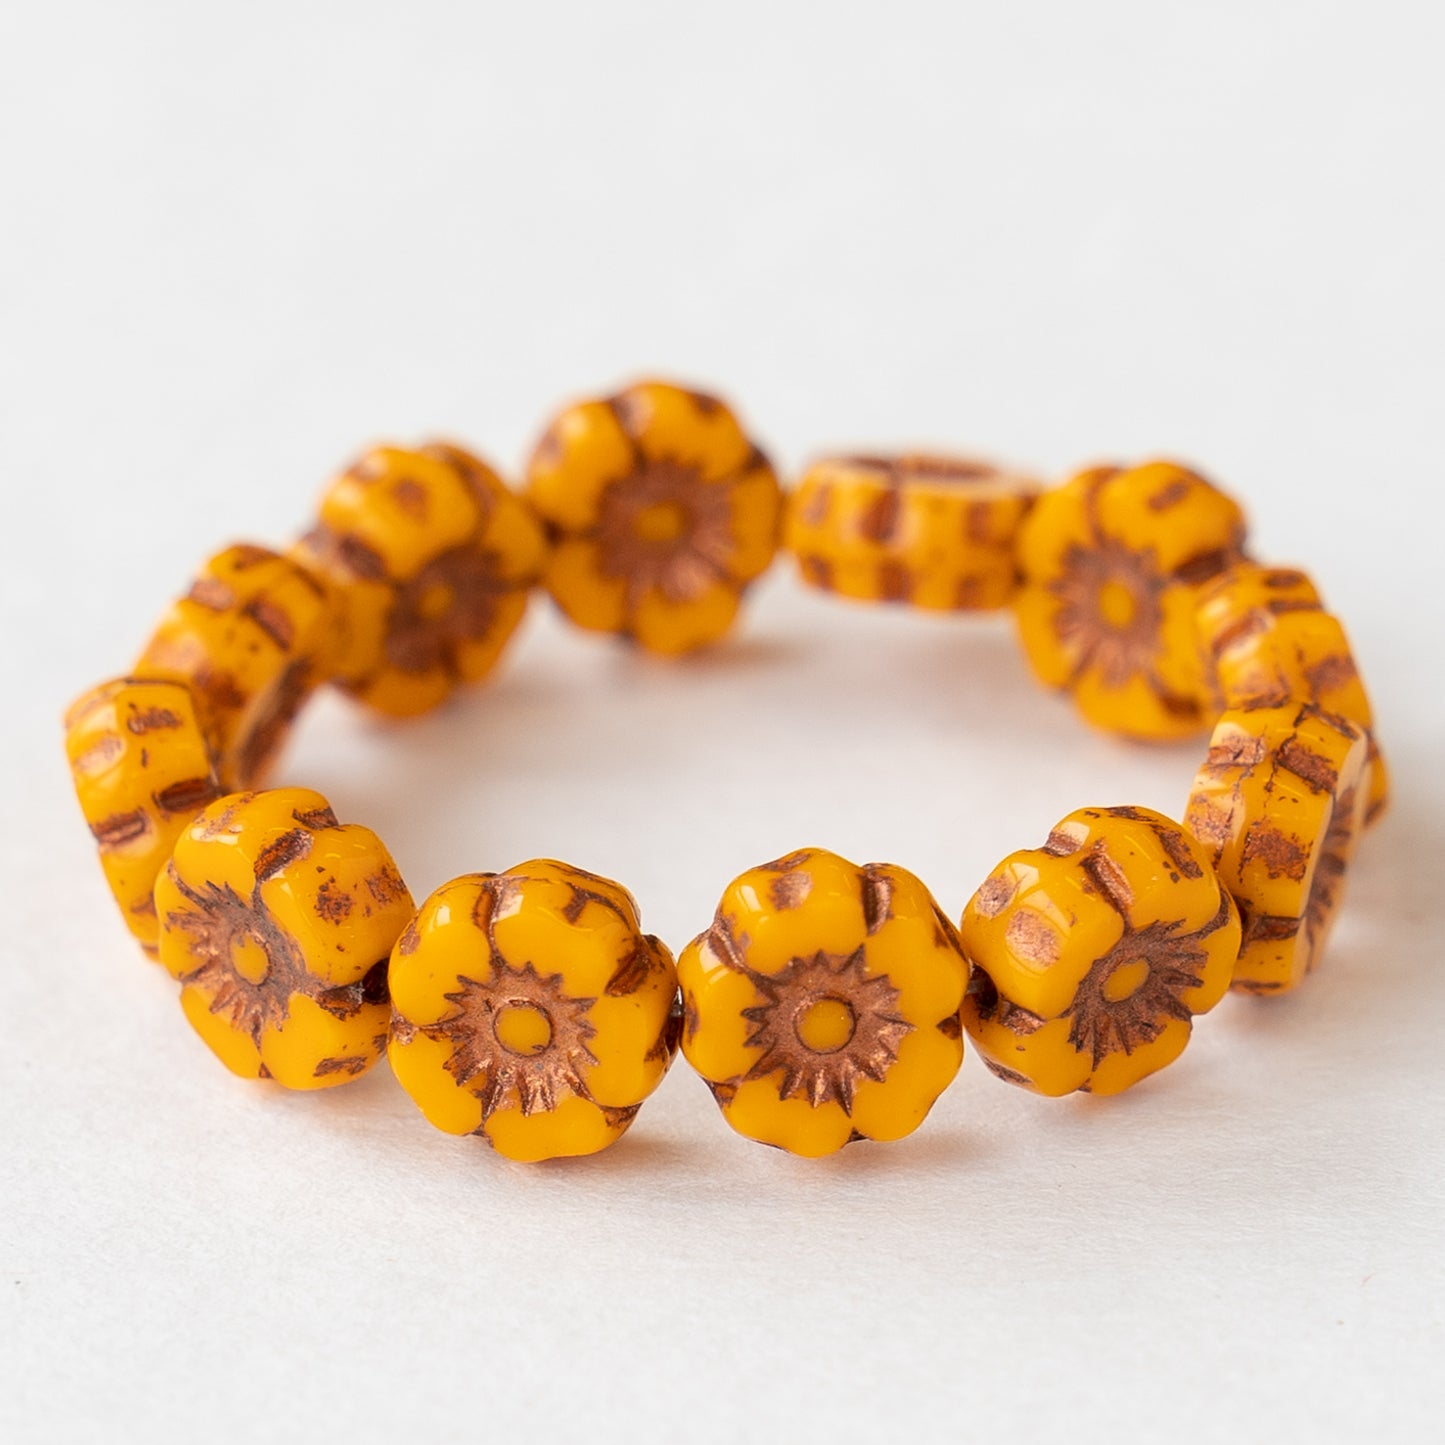 7mm Glass Flower Beads - Marigold Yellow - 12 Beads